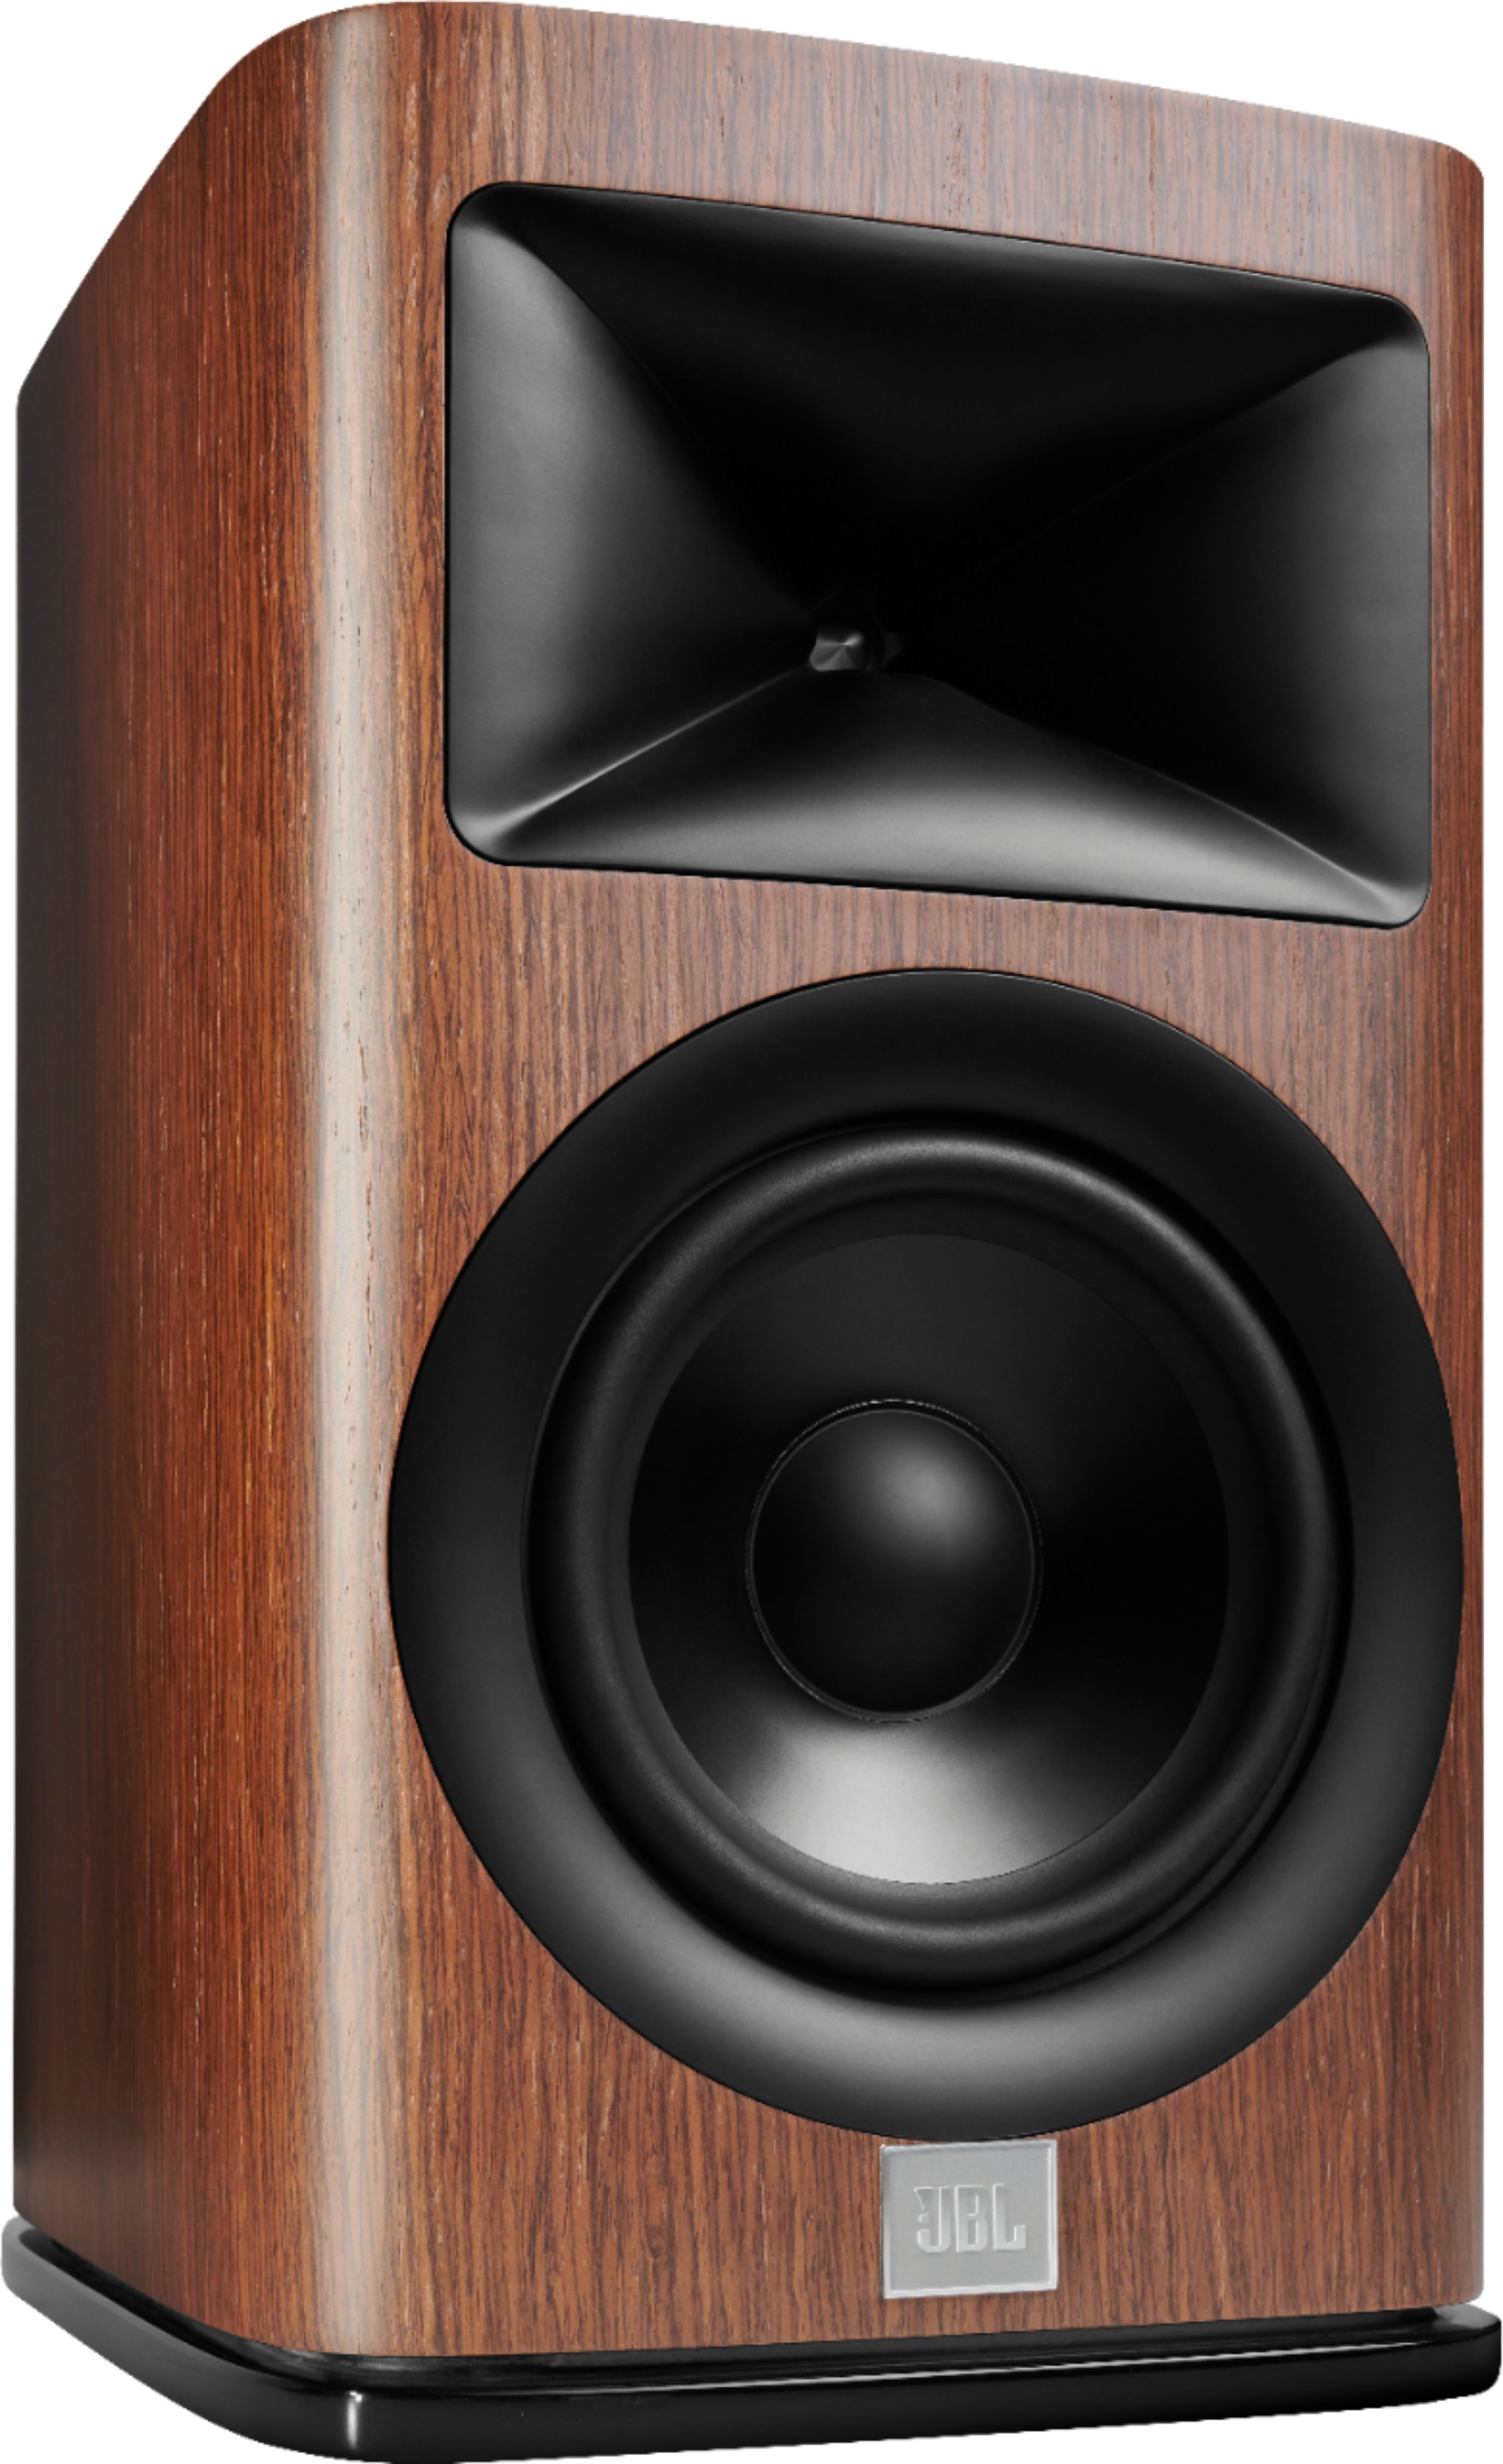 Angle View: JBL - HDI1600 6.5" 2-way bookshelf loudspeaker with 1" compression tweeter, each - Walnut Wood Finish